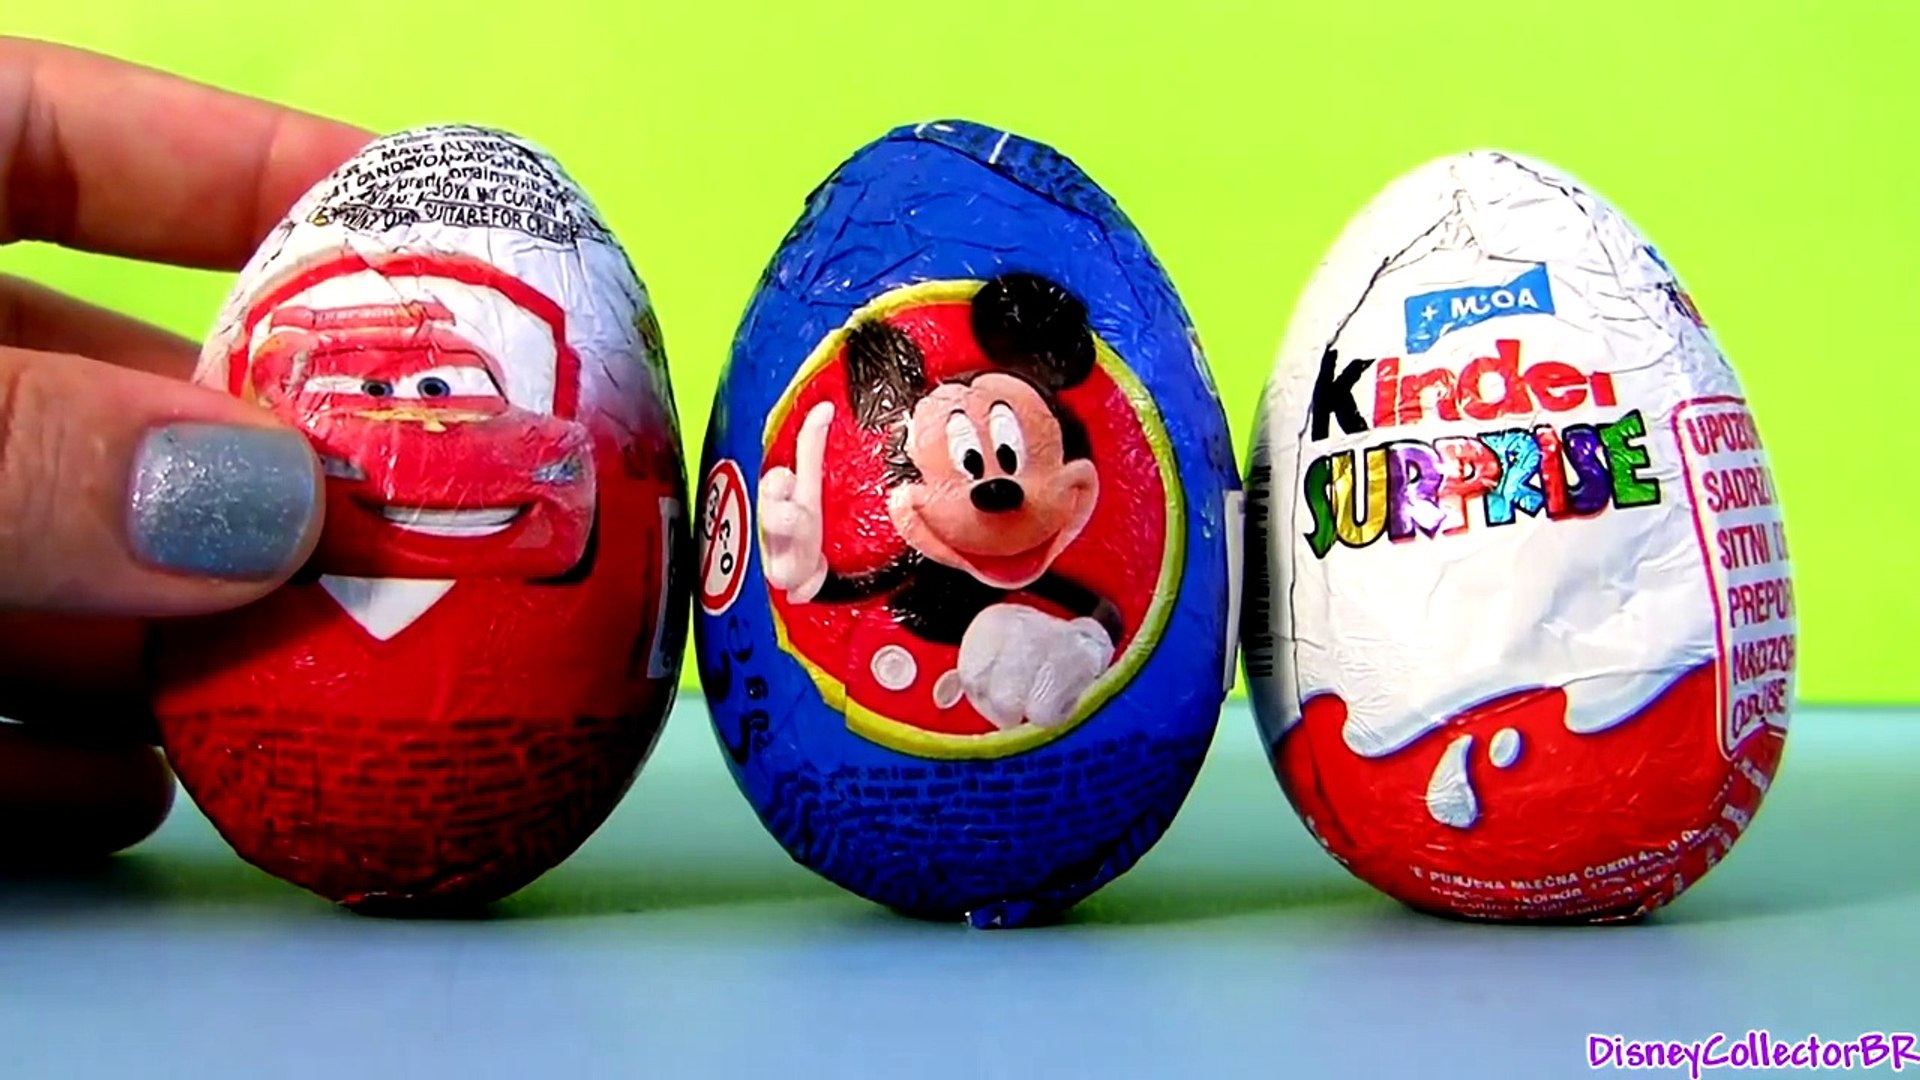 Mickey Mouse Surprise Egg Kinder Surprise Eggs Disney Pixar Cars HOLIDAY  edition Sorpresa - Dailymotion Video